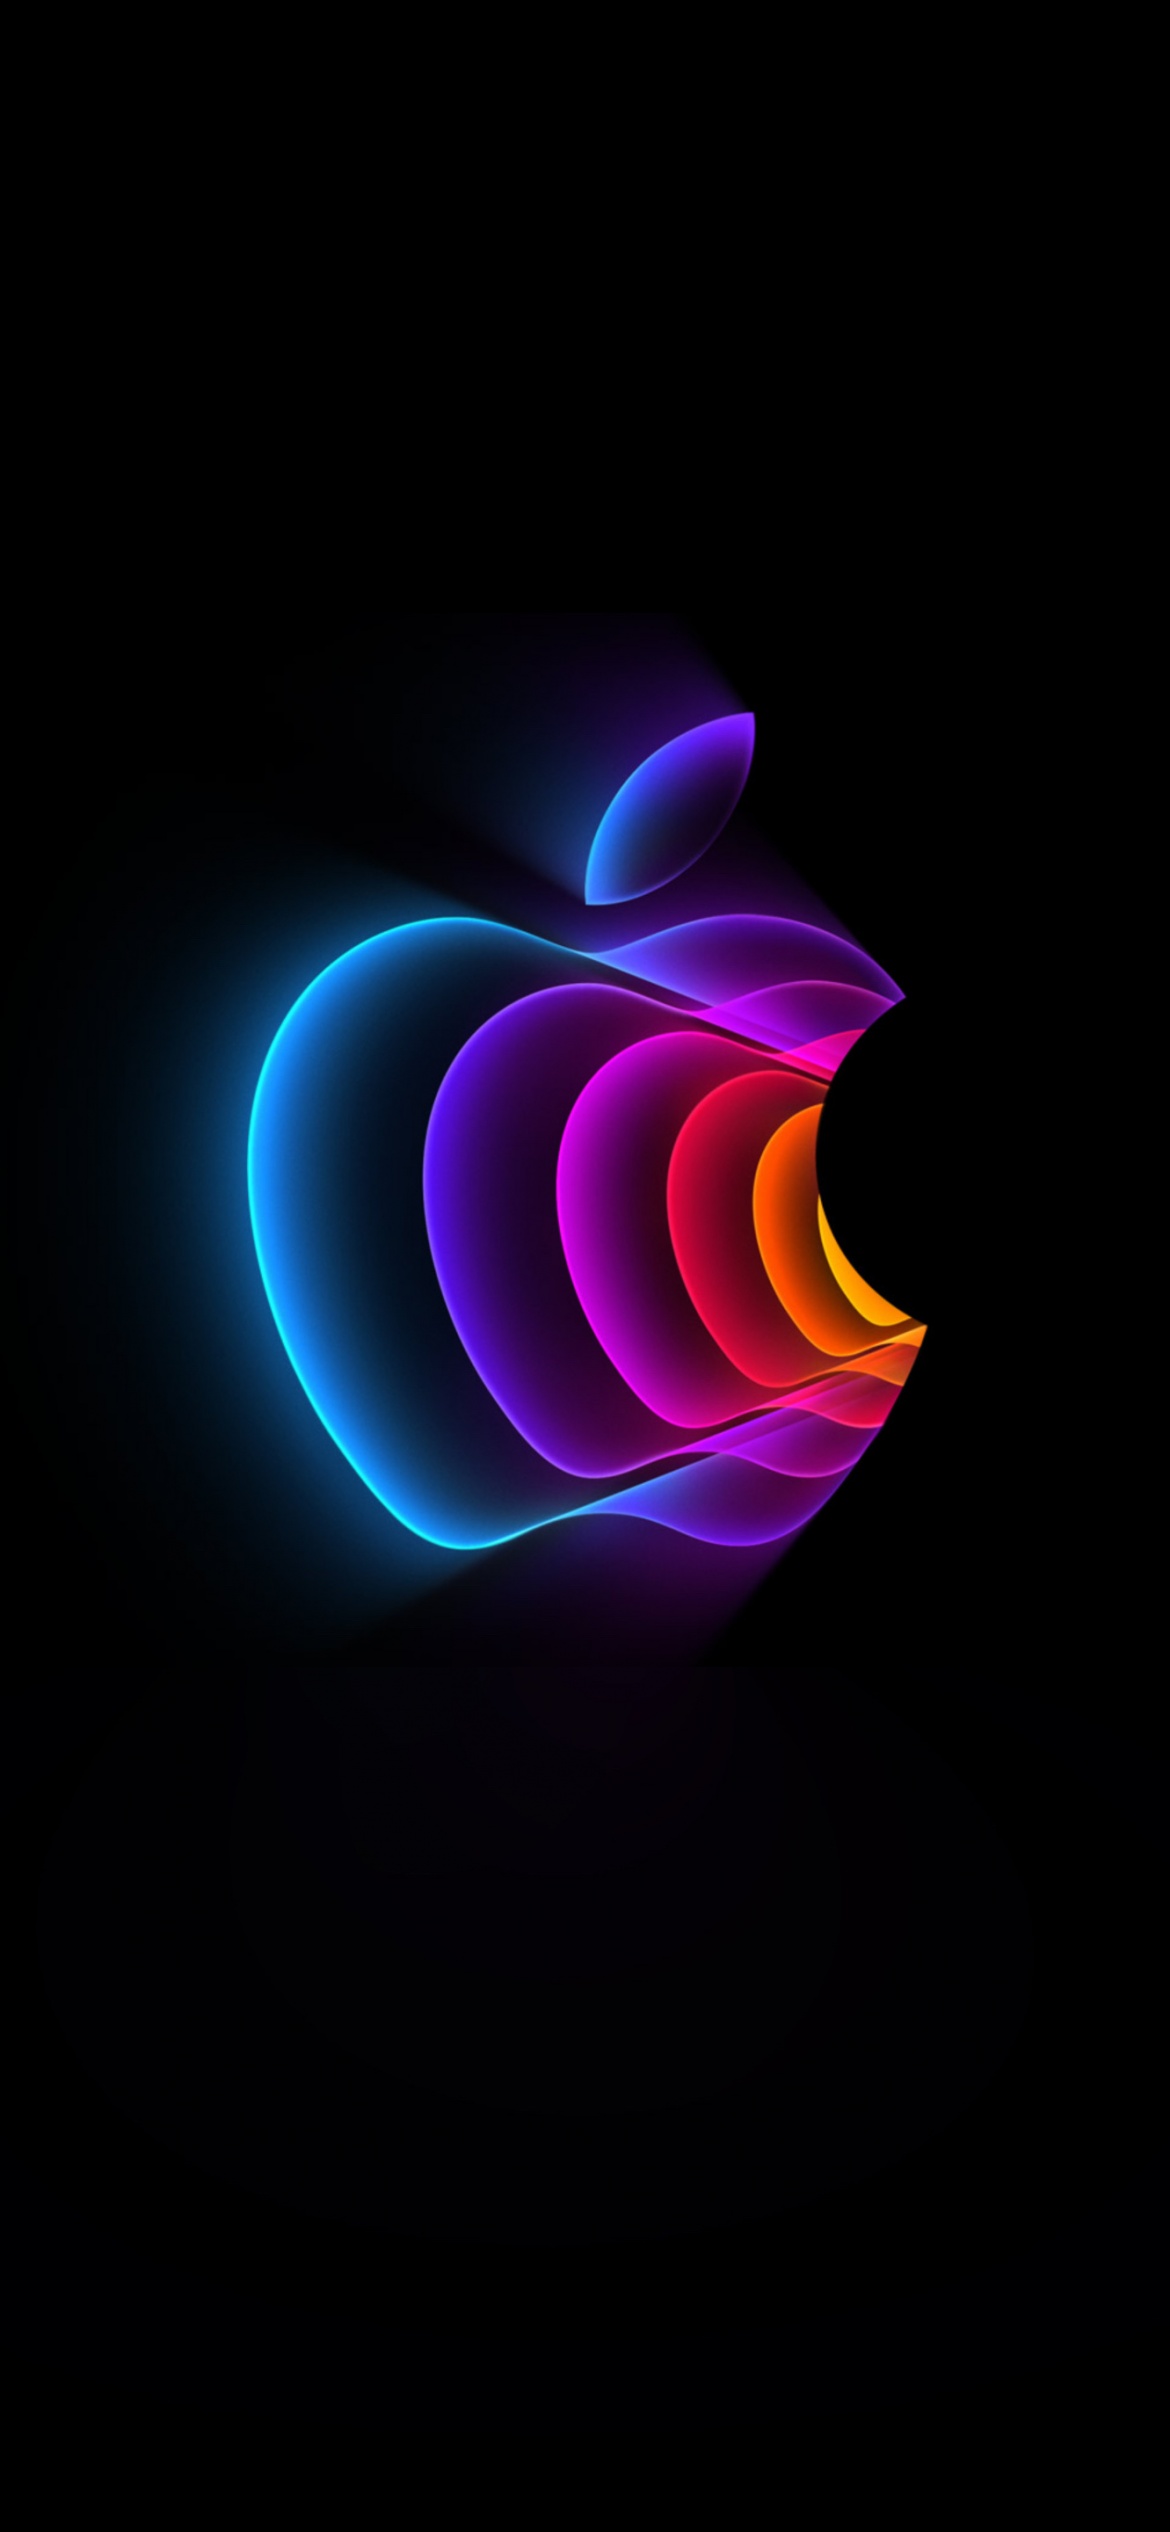 Apple Event 2022 Wallpaper 4K, Colorful, Apple logo, Technology, #7491